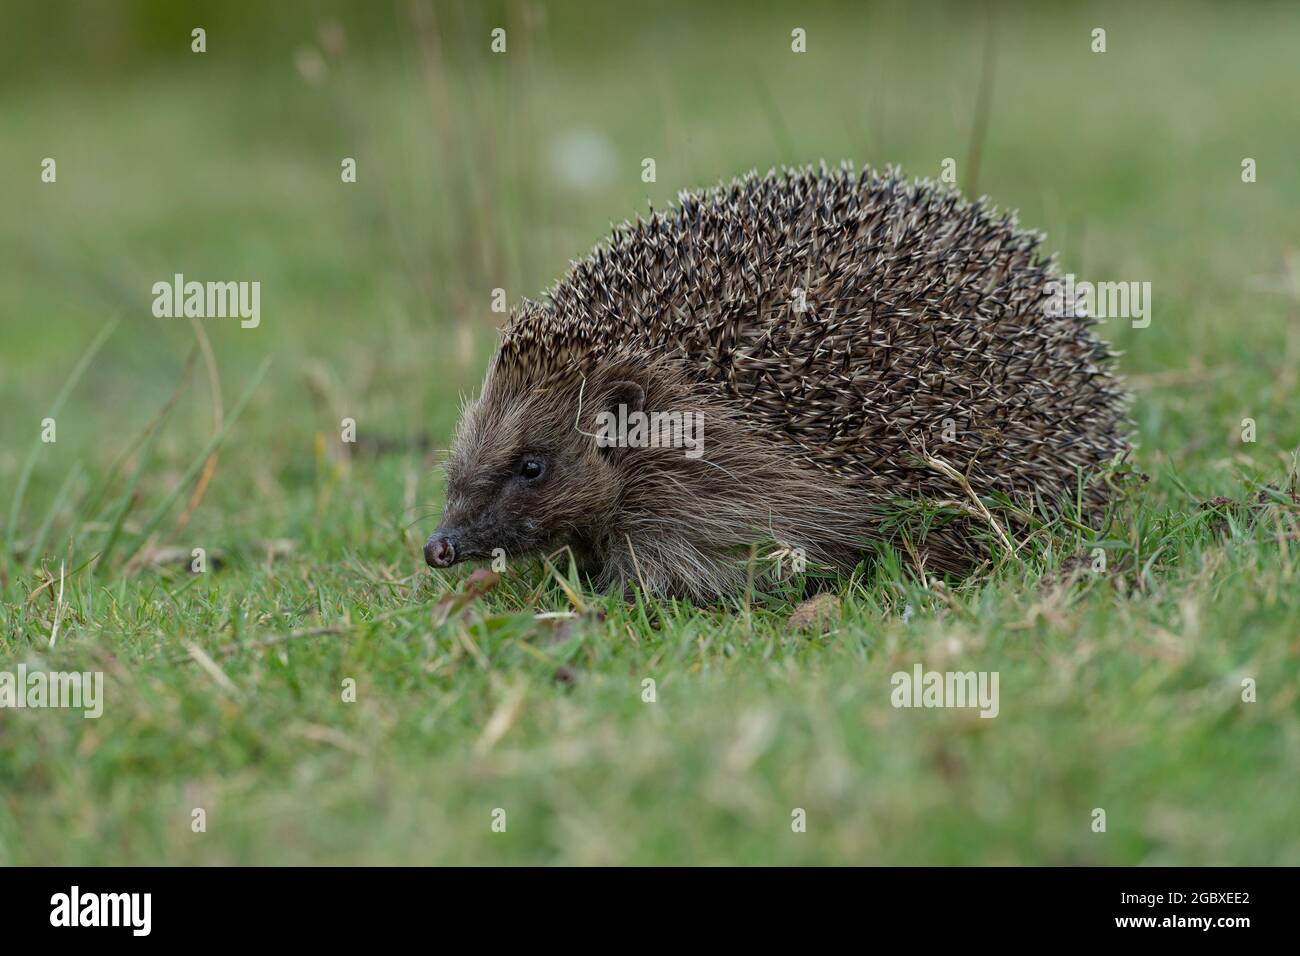 hedgehog, Erinaceus europaeus Stock Photo